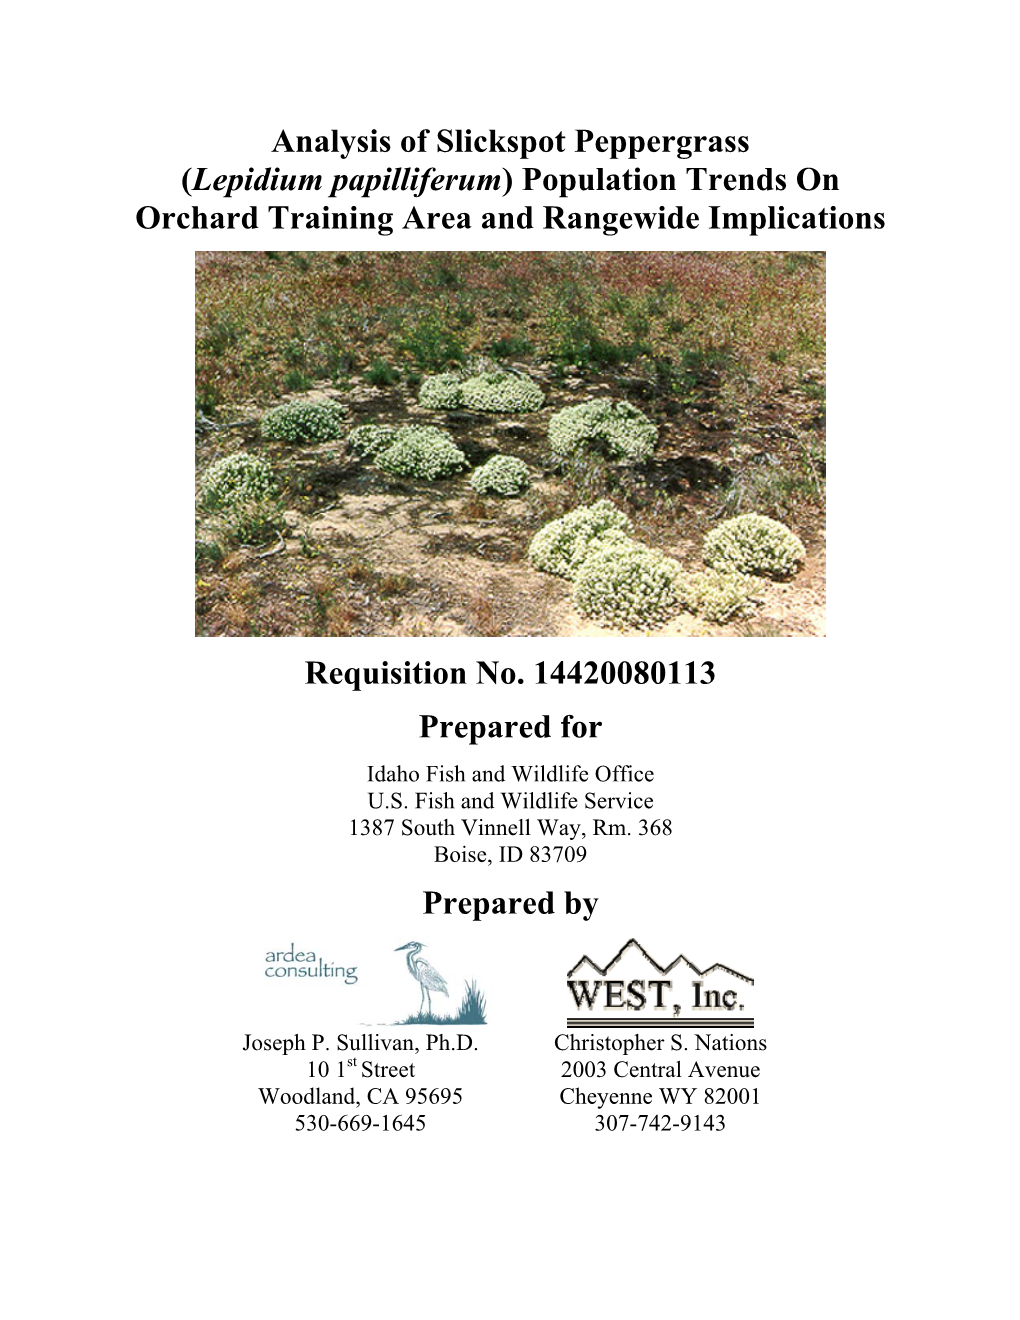 Analysis of Slickspot Peppergrass (Lepidium Papilliferum) Population Trends on Orchard Training Area and Rangewide Implications